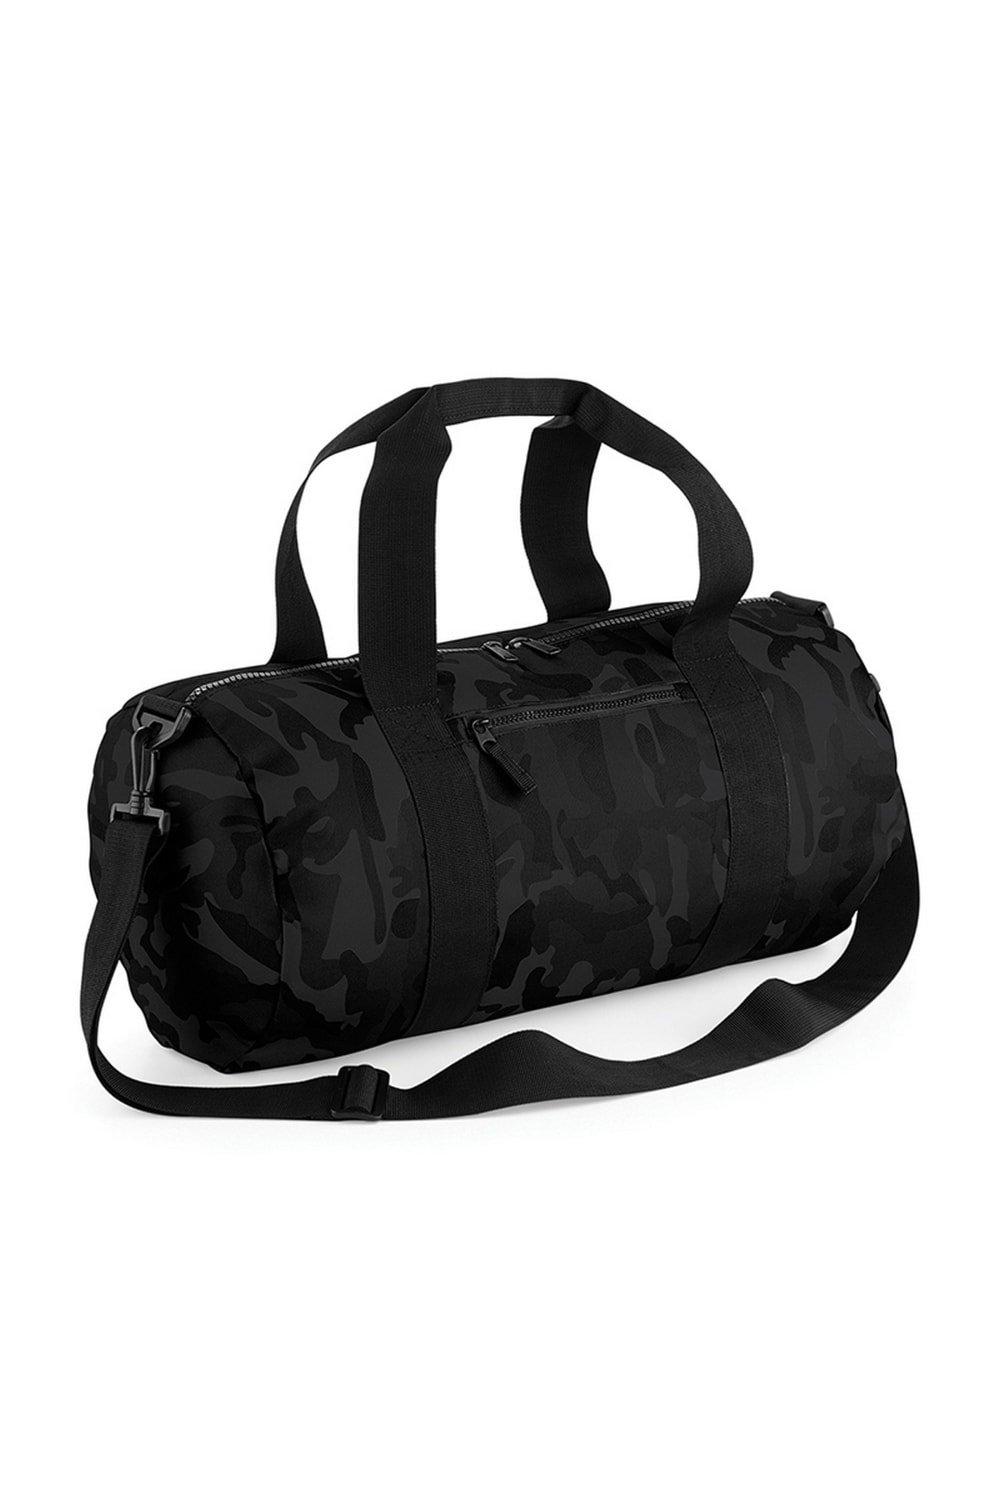 Камуфляжная бочка/спортивная сумка (20 литров) Bagbase, черный cумка на пояс тачки 25 x 6 x 13 см отдел на молнии без подклада disney в наборе 1шт